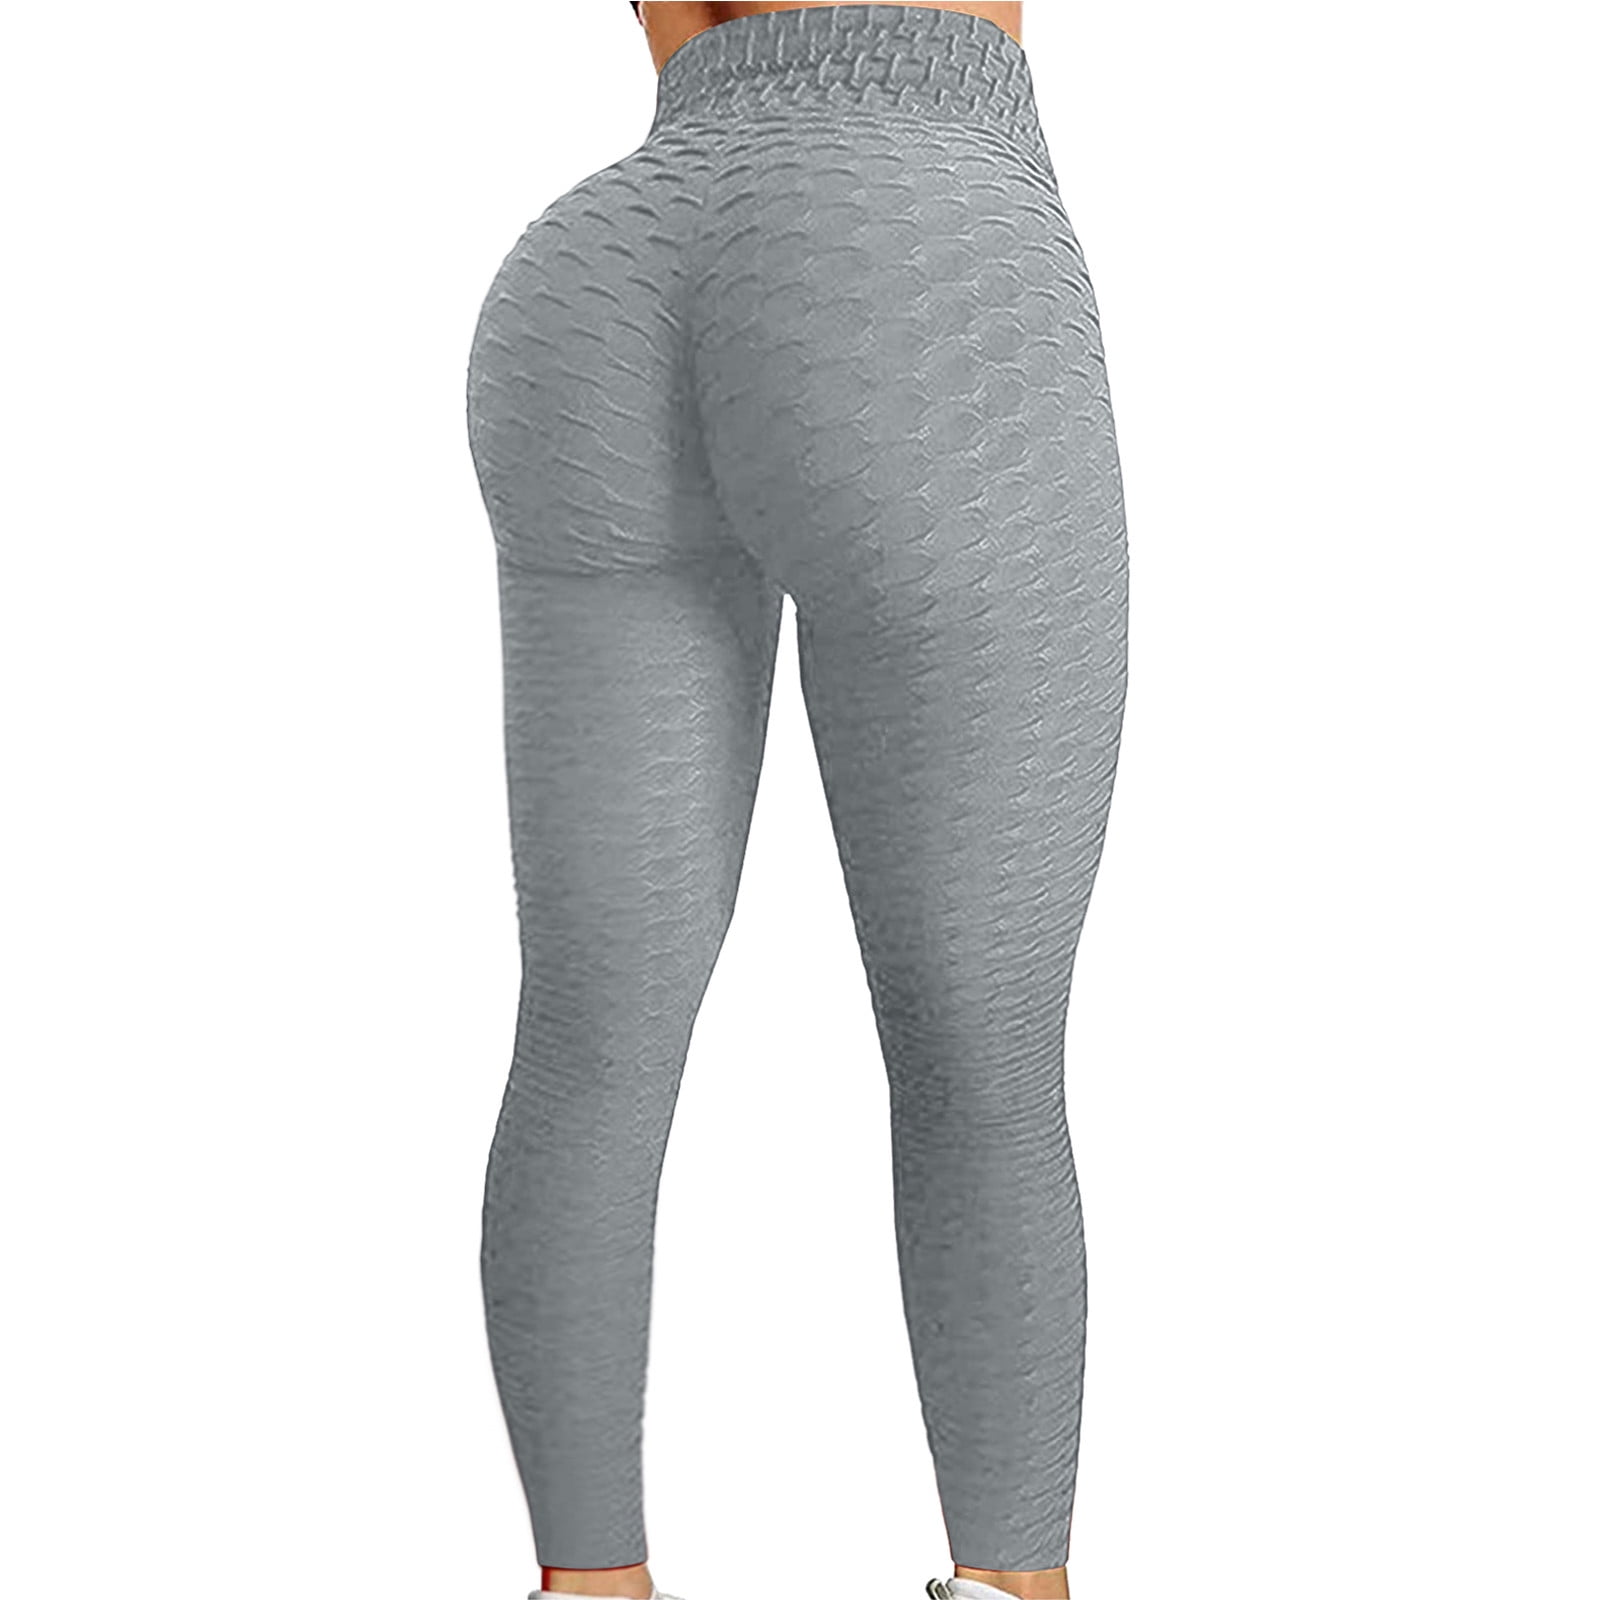 Aayomet Yoga Pants Women's Casual Bootleg Yoga Pants V Crossover